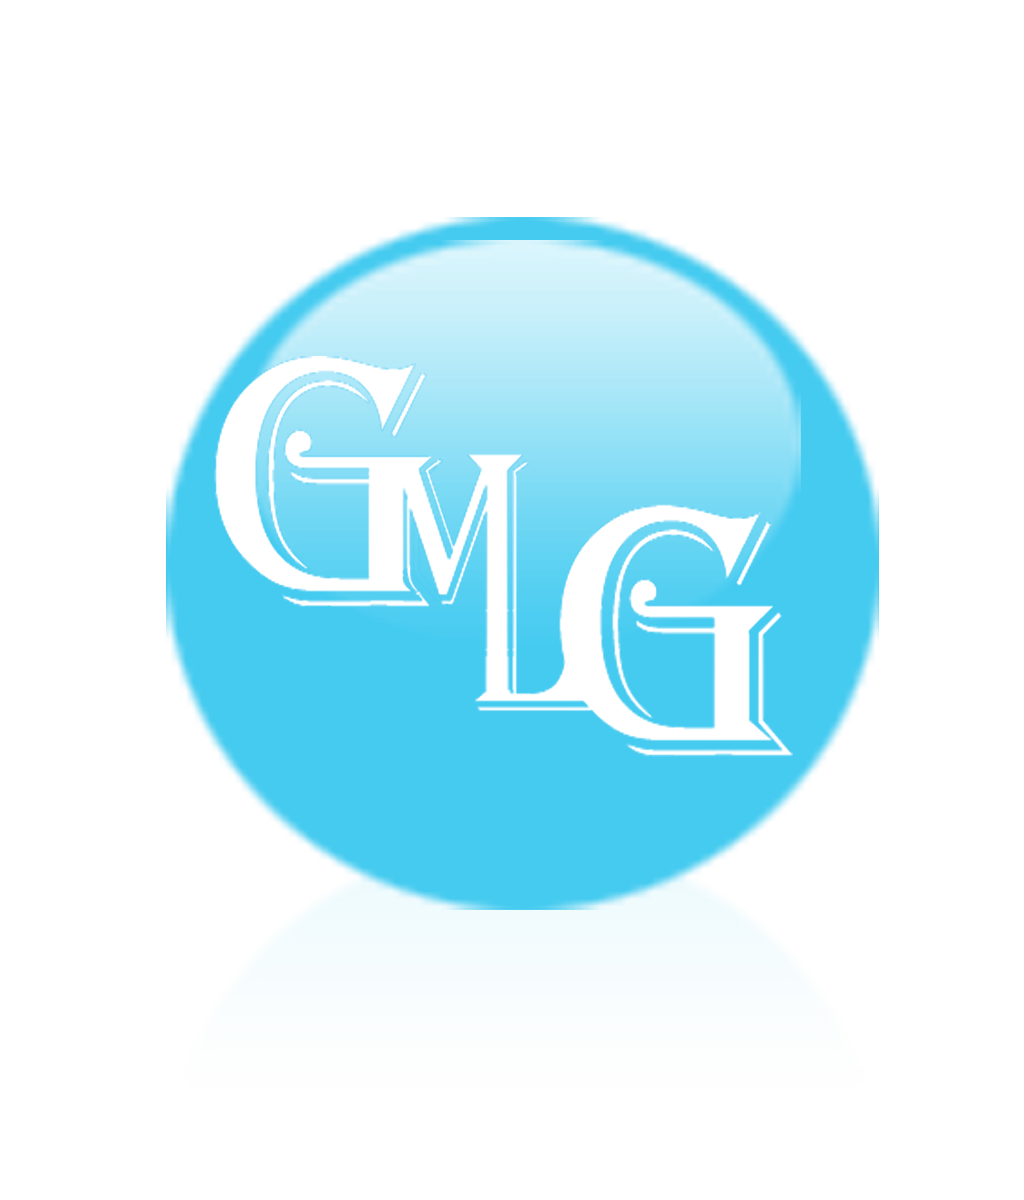 GMLG logo